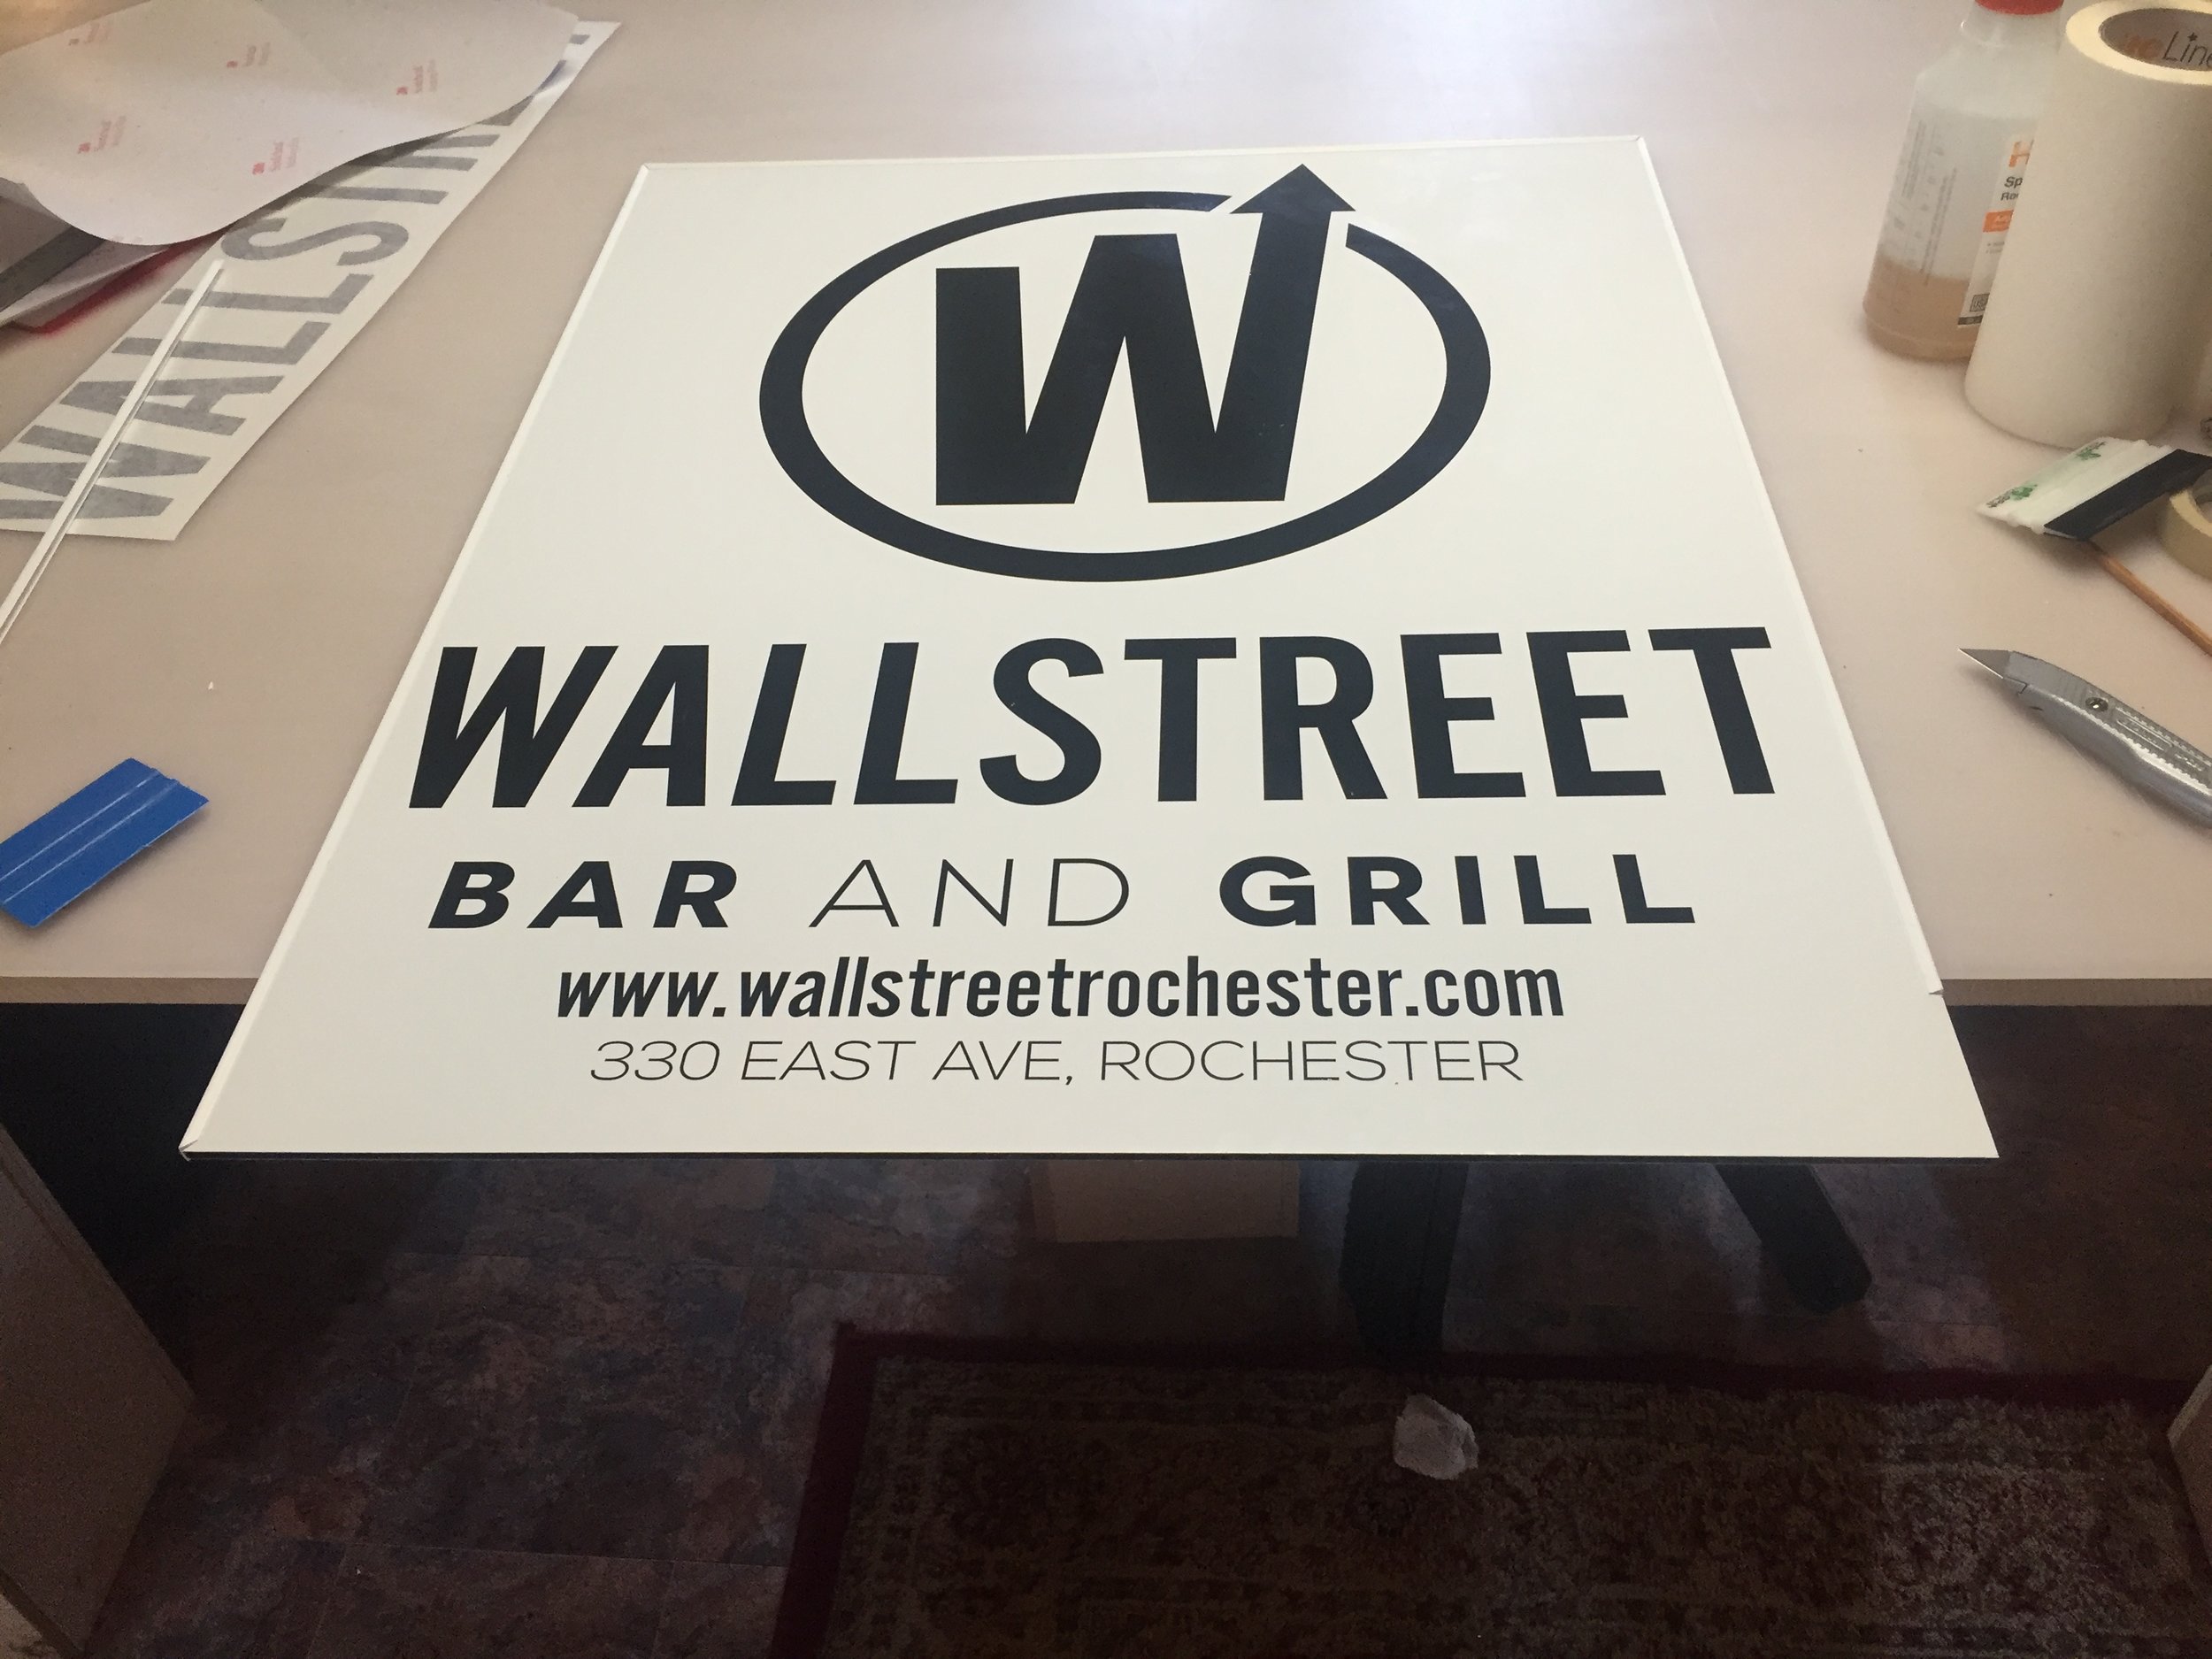 Wallstreet Bar and Grill